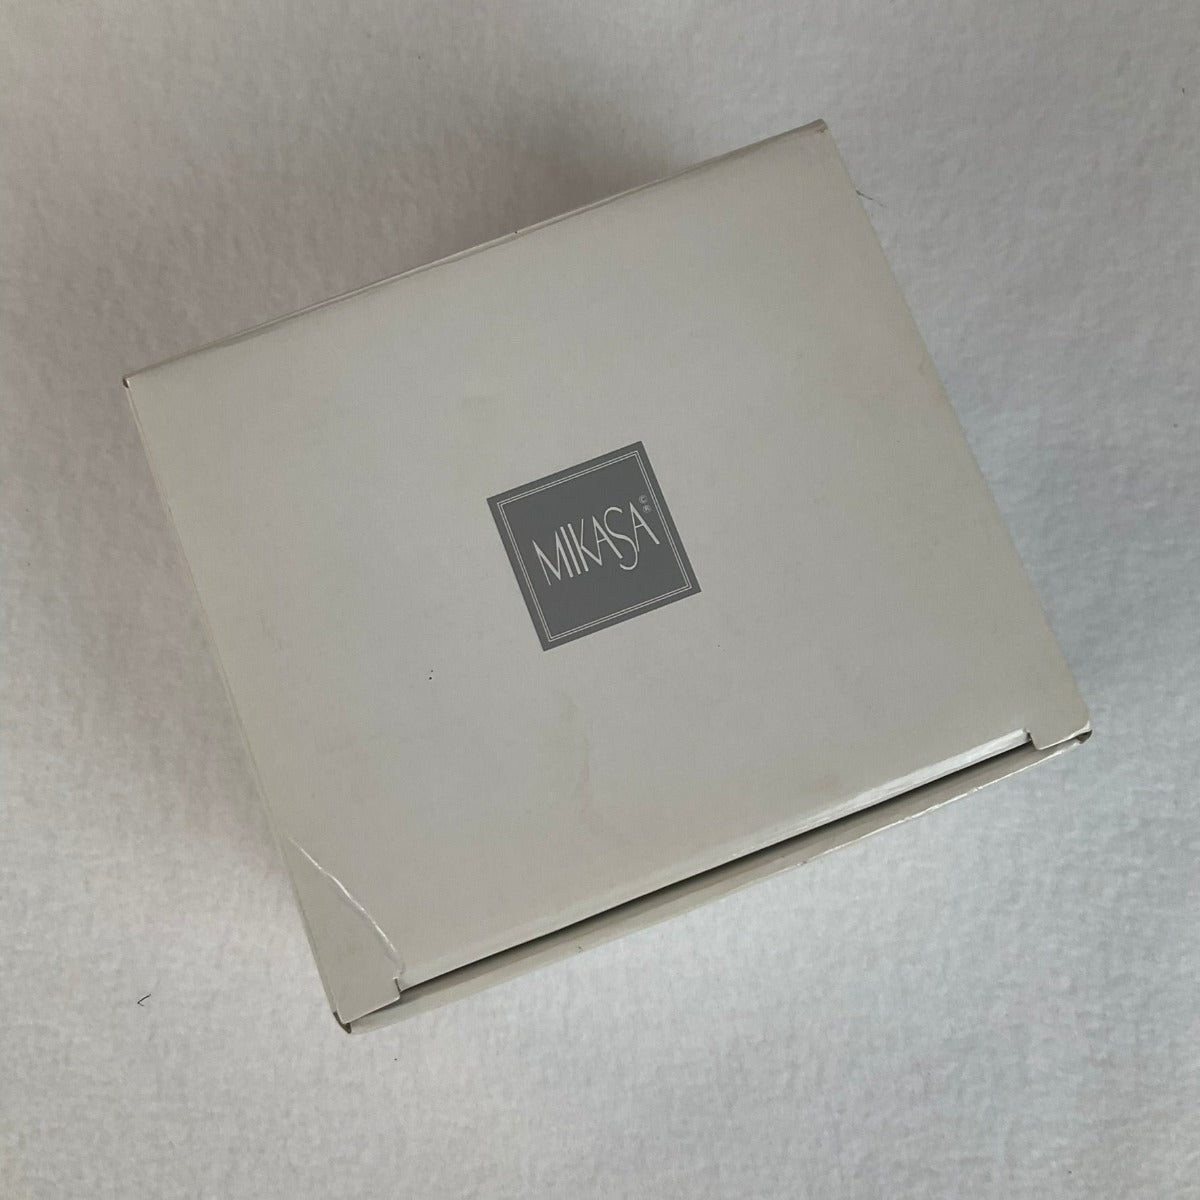 MIKASA Diamond Fire Crystal Votive - Original Box